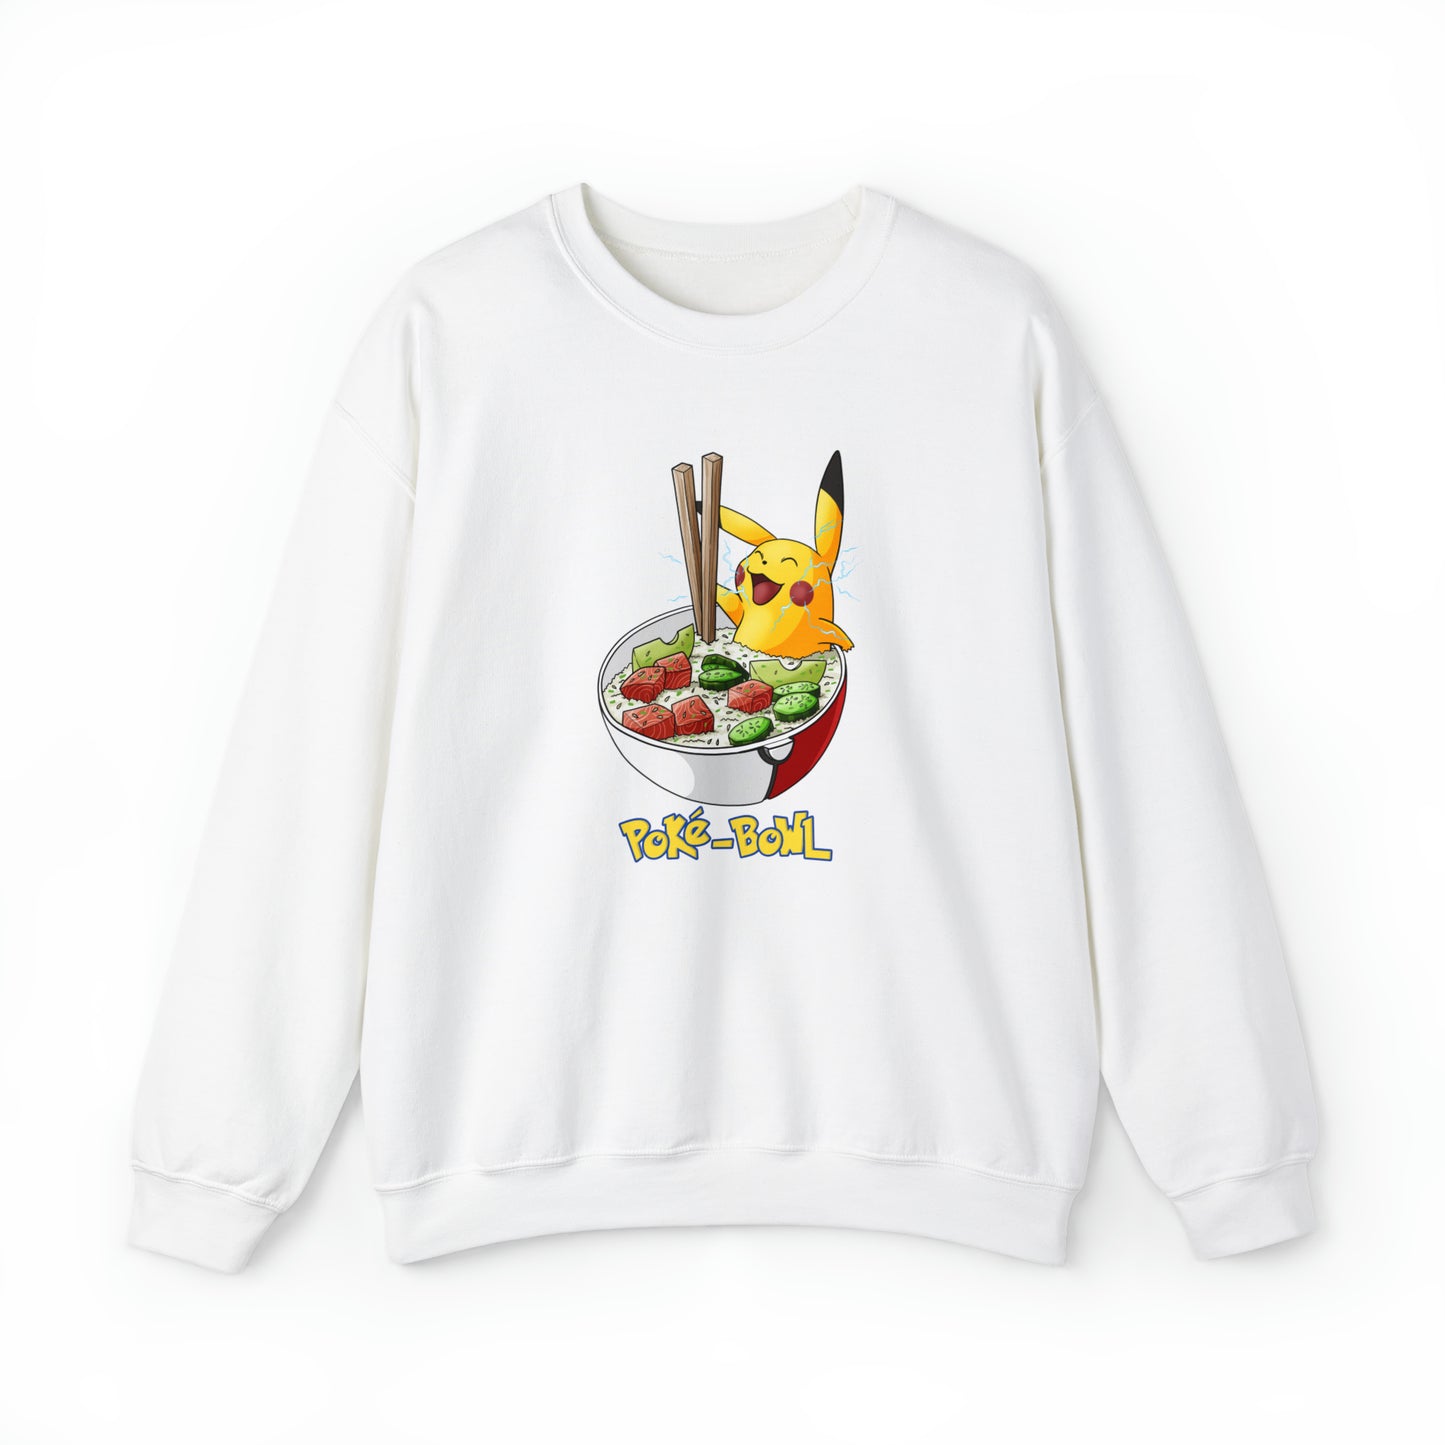 Custom Parody Crewneck Sweatshirt, Poke-bowl Design